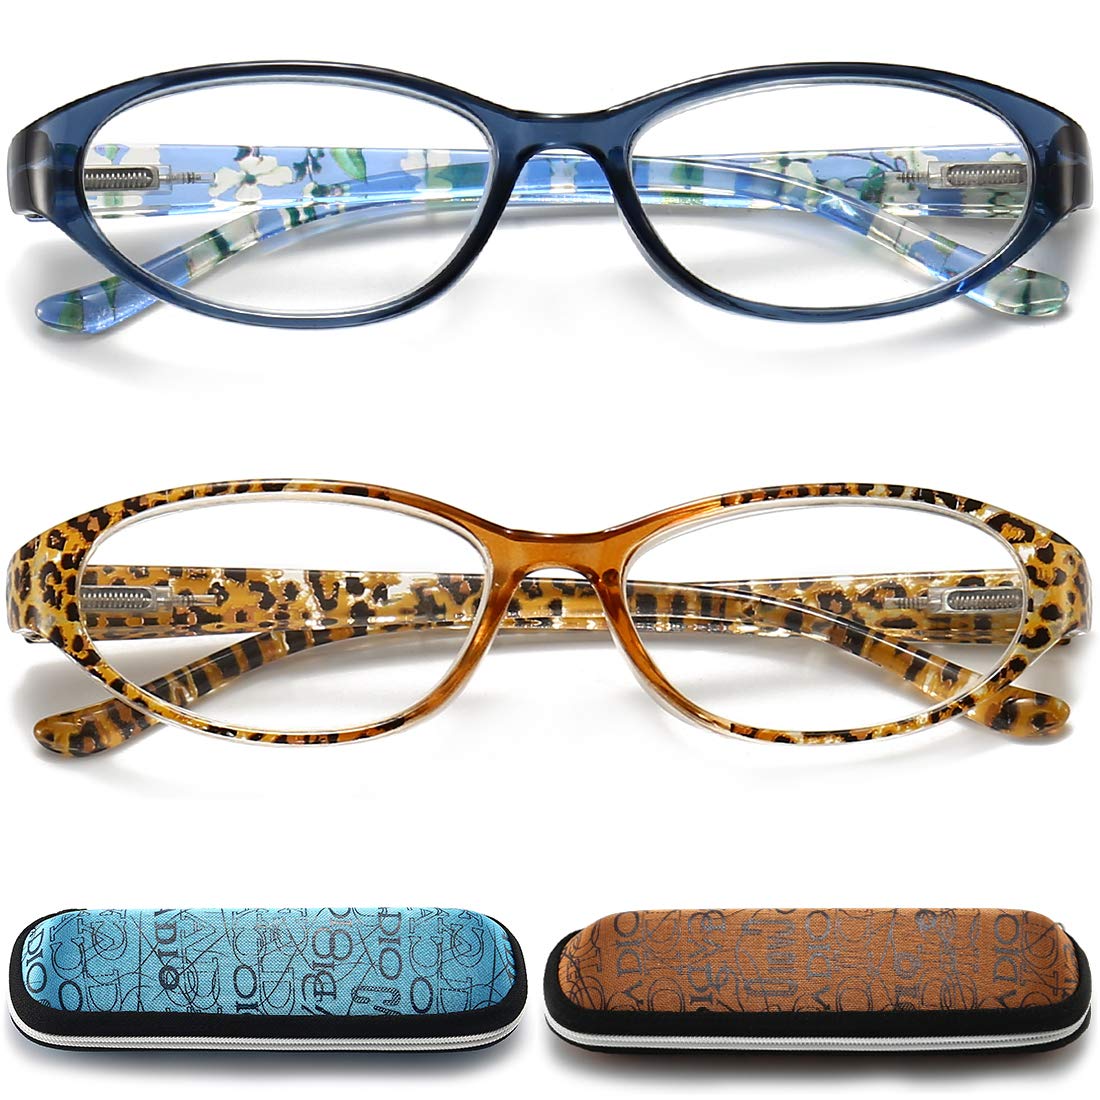 RaoOG Cat Eye Reading Glasses for Women 3.5,Blue Light Blocking Computer Readers, Ladies Fashion Cateye Frame Quality Eyeglasses